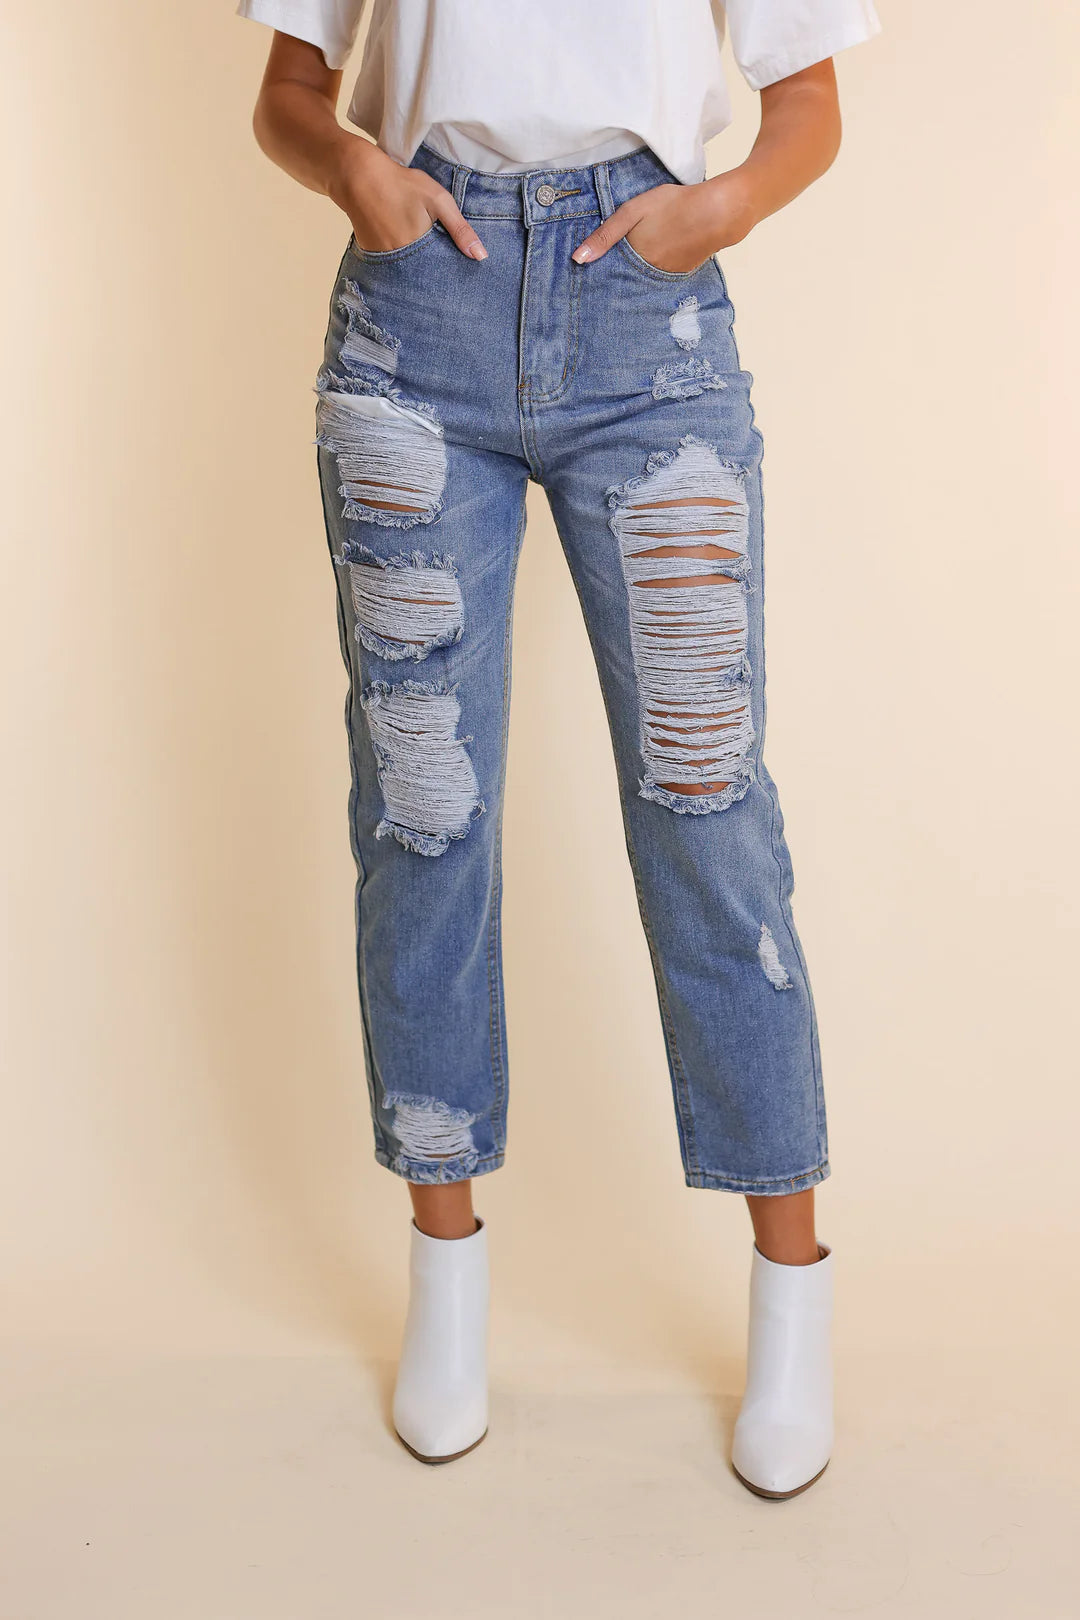 The Savannah Jeans